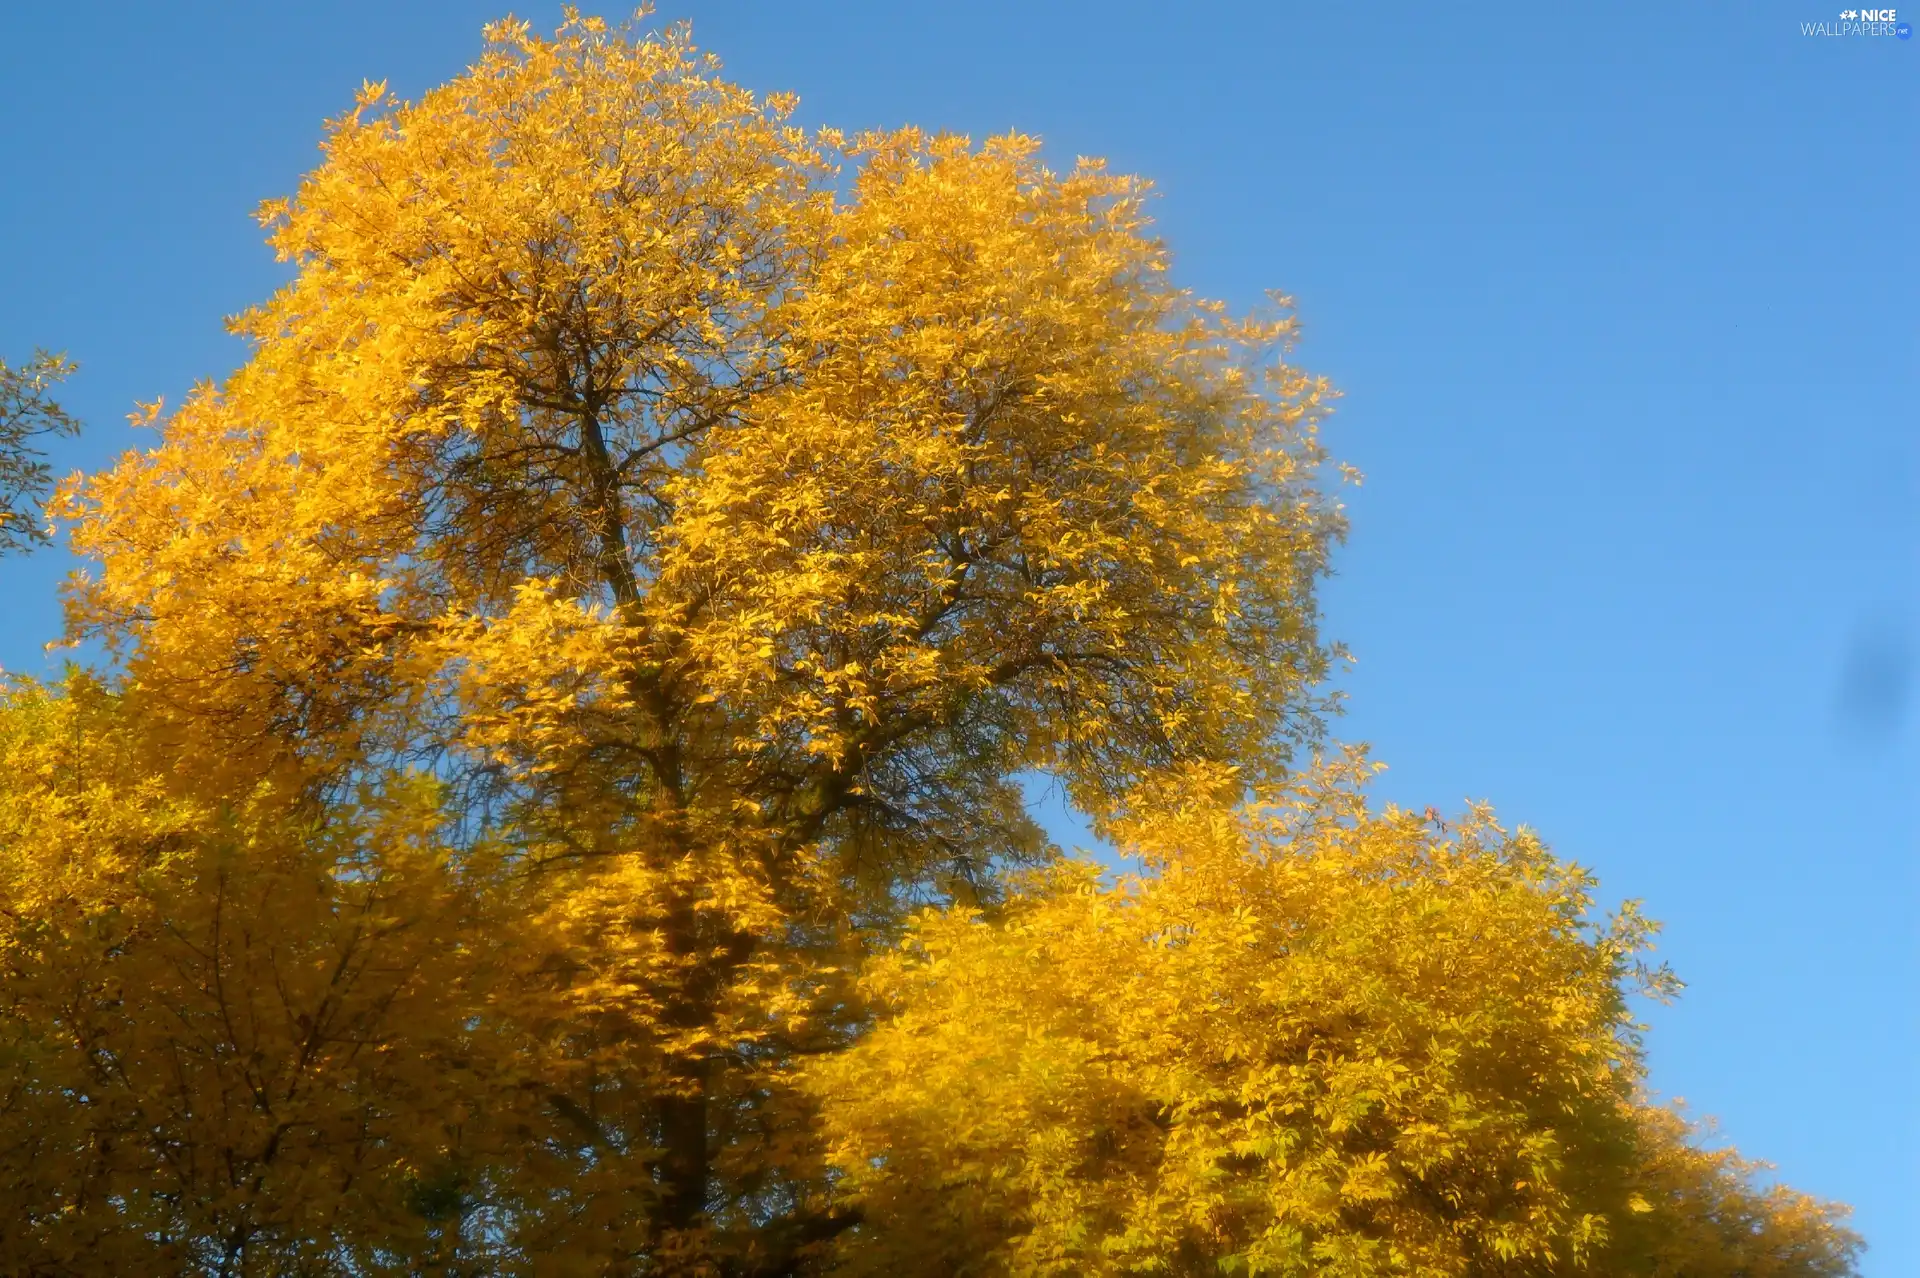 Leaf, autumn, Yellow